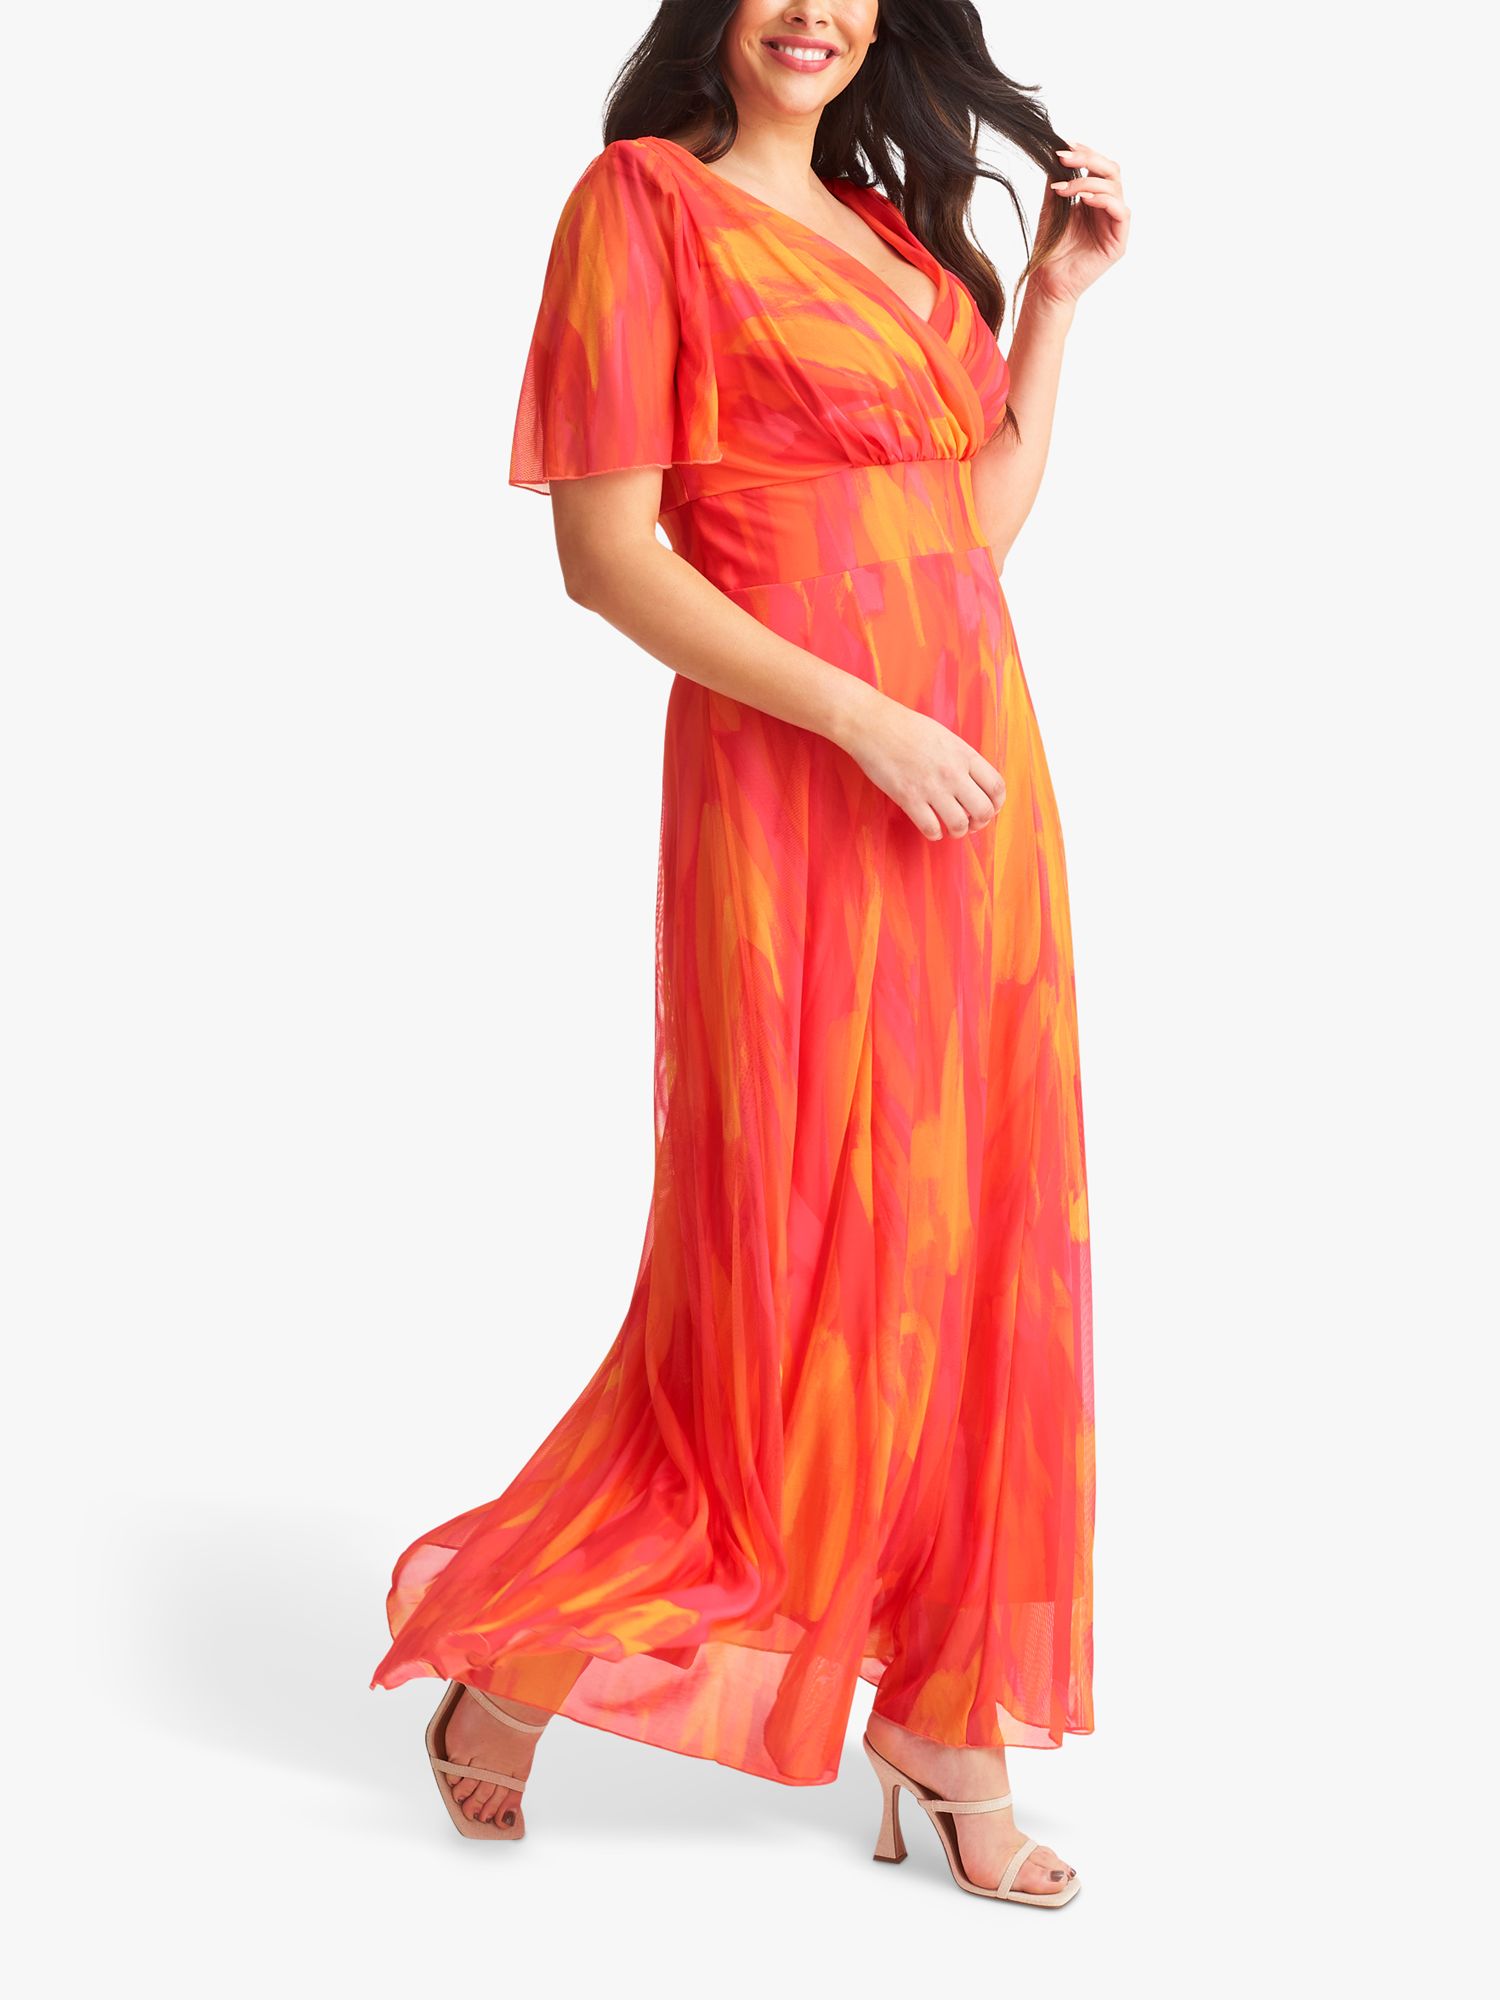 Scarlett & Jo Isabelle Abstract Print Float Sleeve Maxi Dress, Orange/Pink, 26